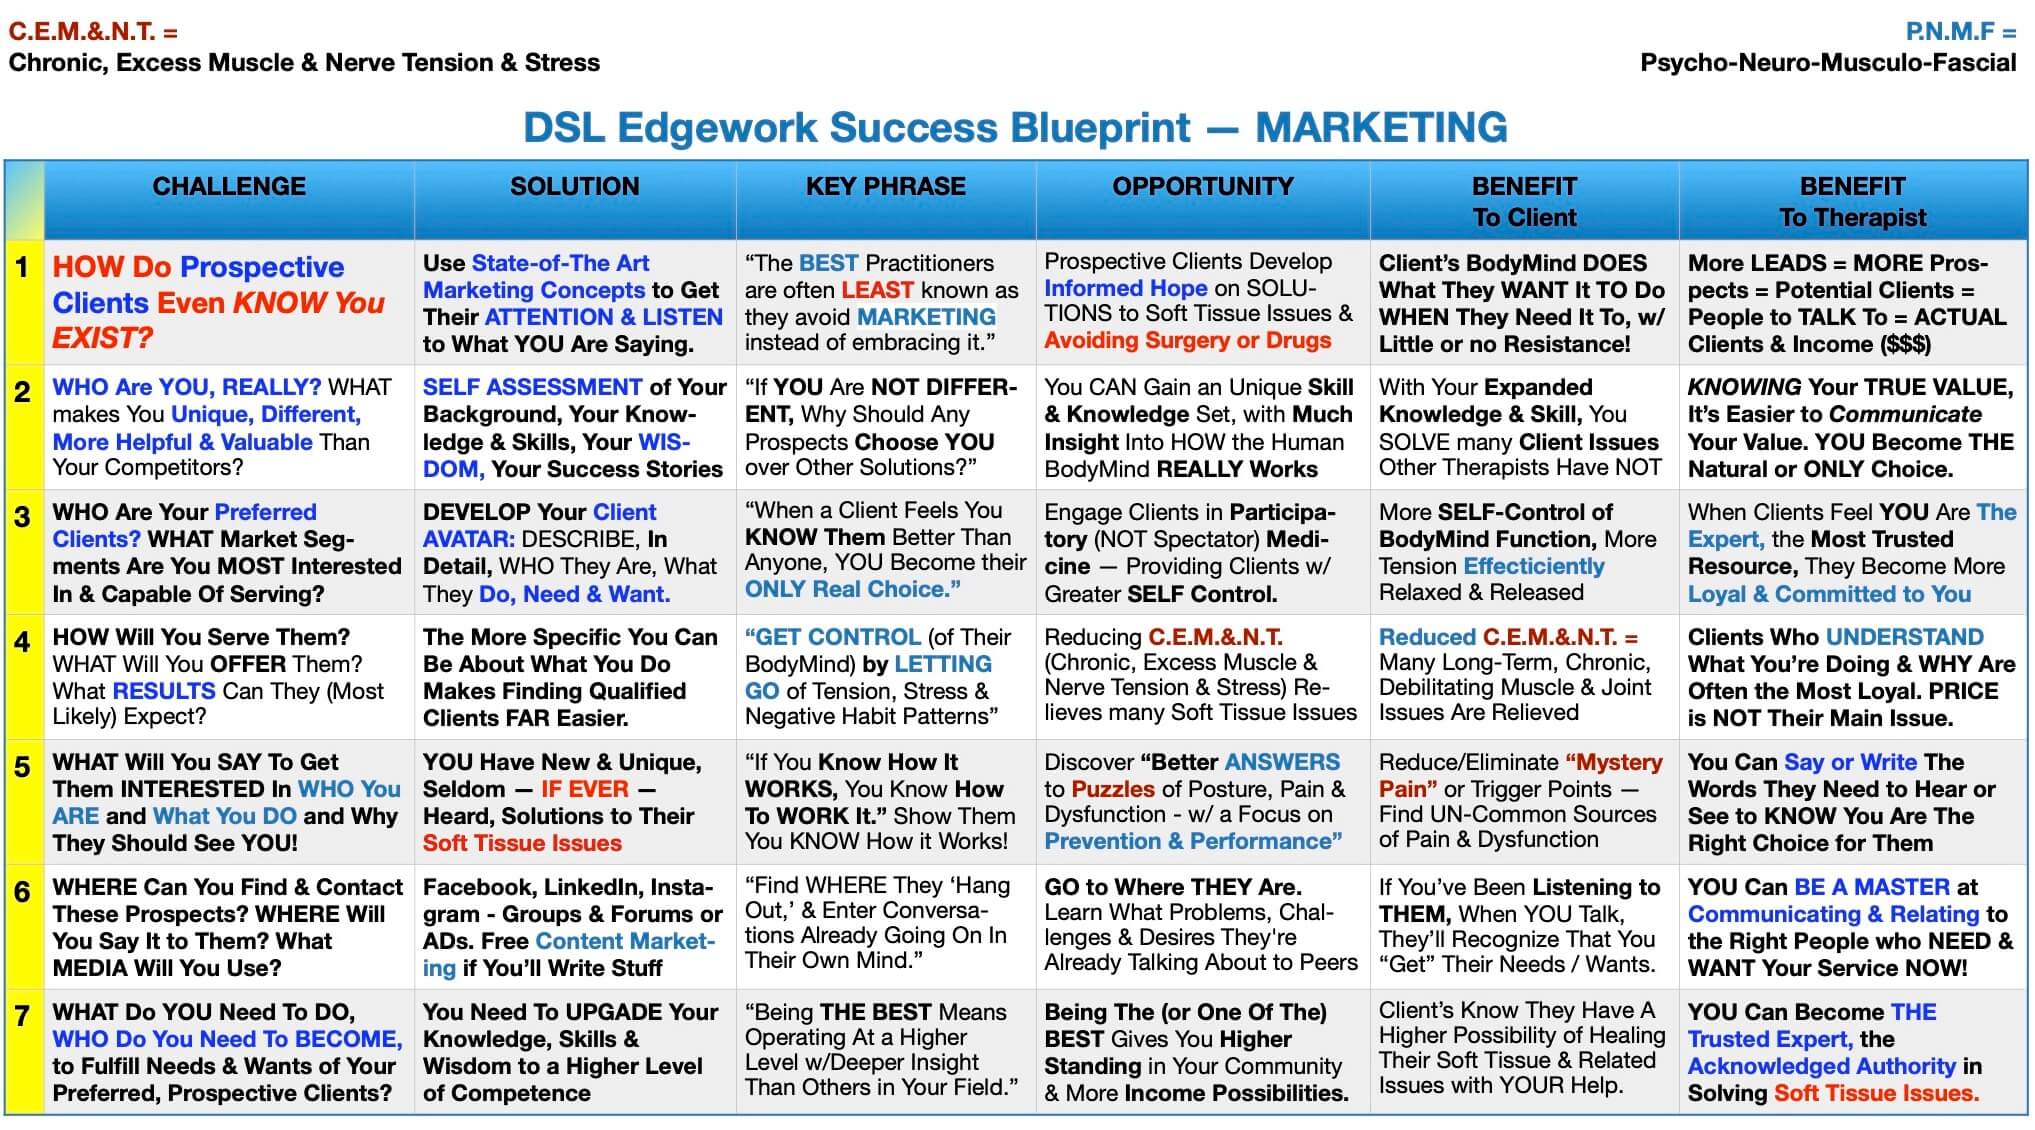 Success Blueprint for Marketing 